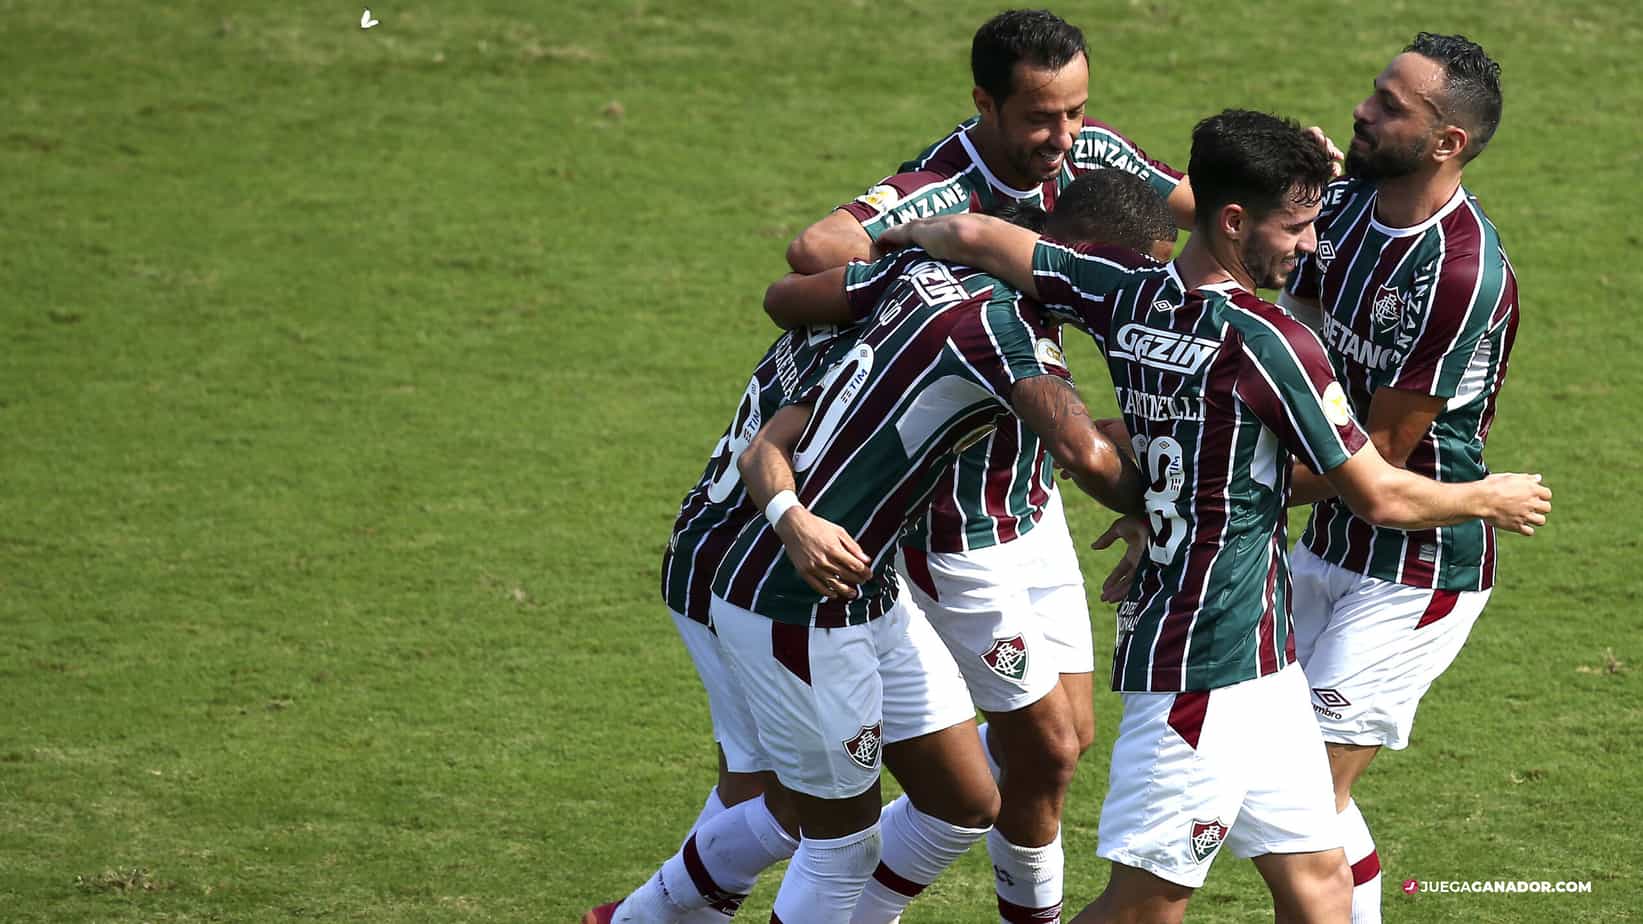 Fluminense vs. Santos – Betting Odds and Free Pick